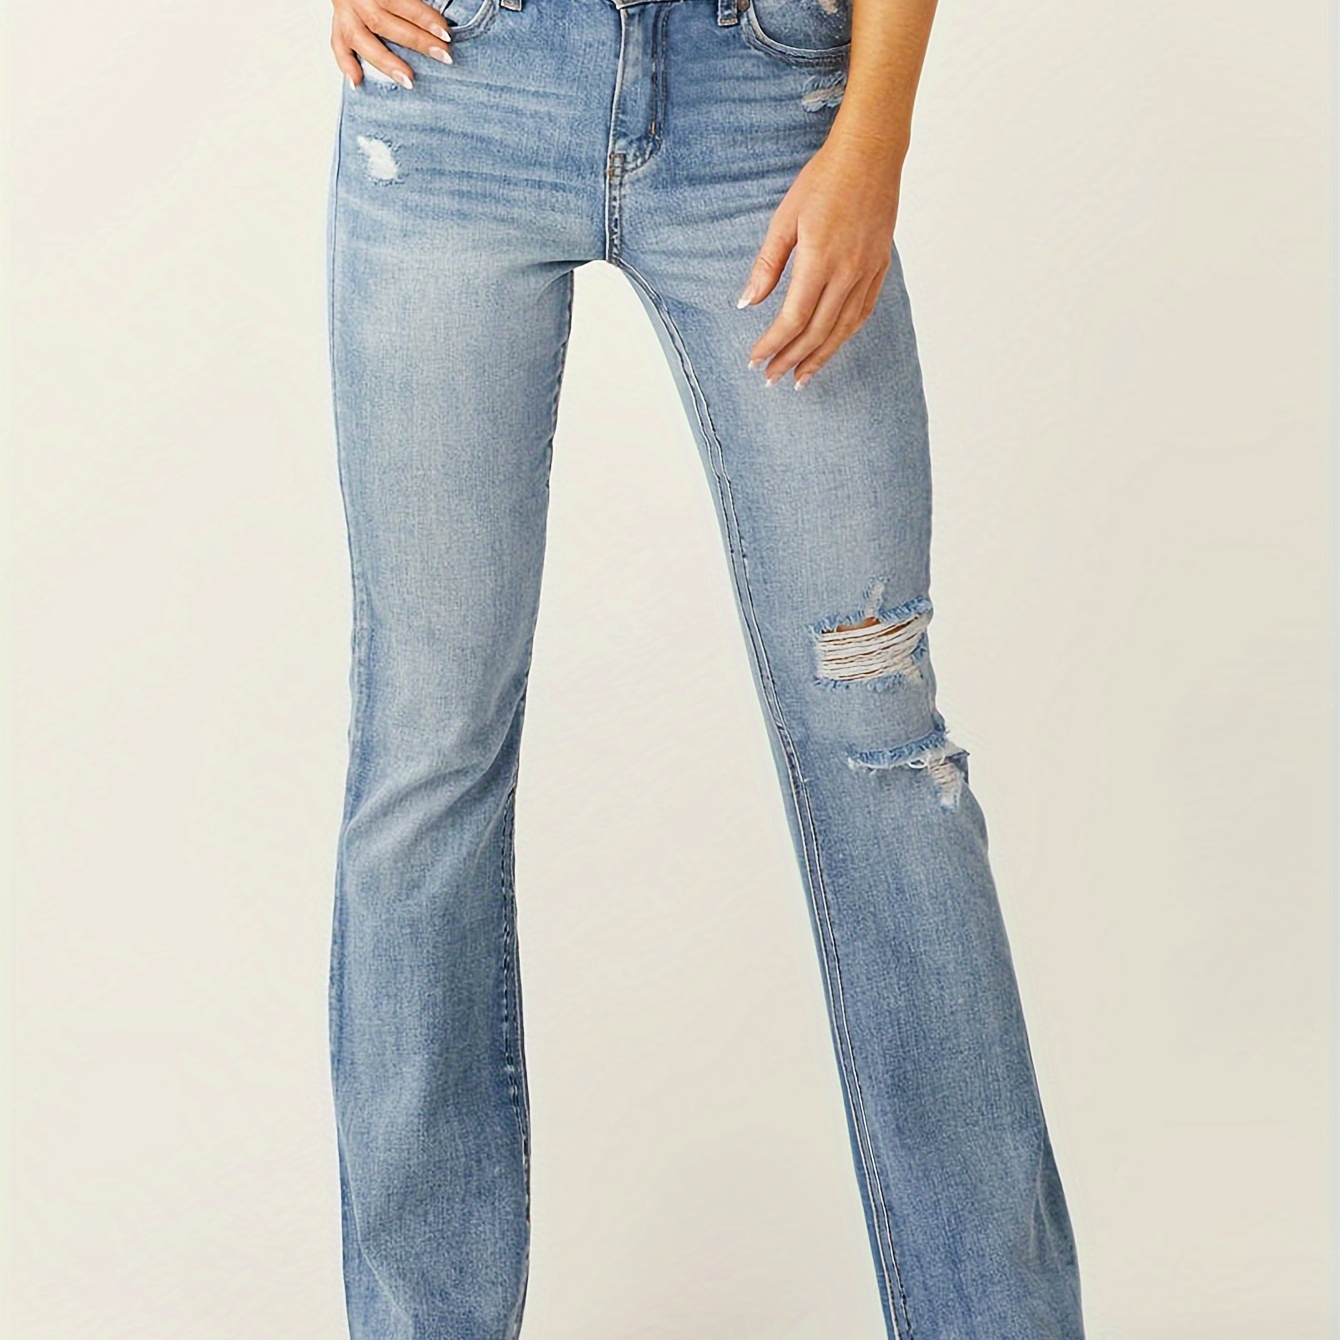 

Vintage Ripped Raw Hem Jeans, Light Wash Distressed Water Ripple Embossed Bootcut Denim Pants, Women's Denim Jeans & Clothing